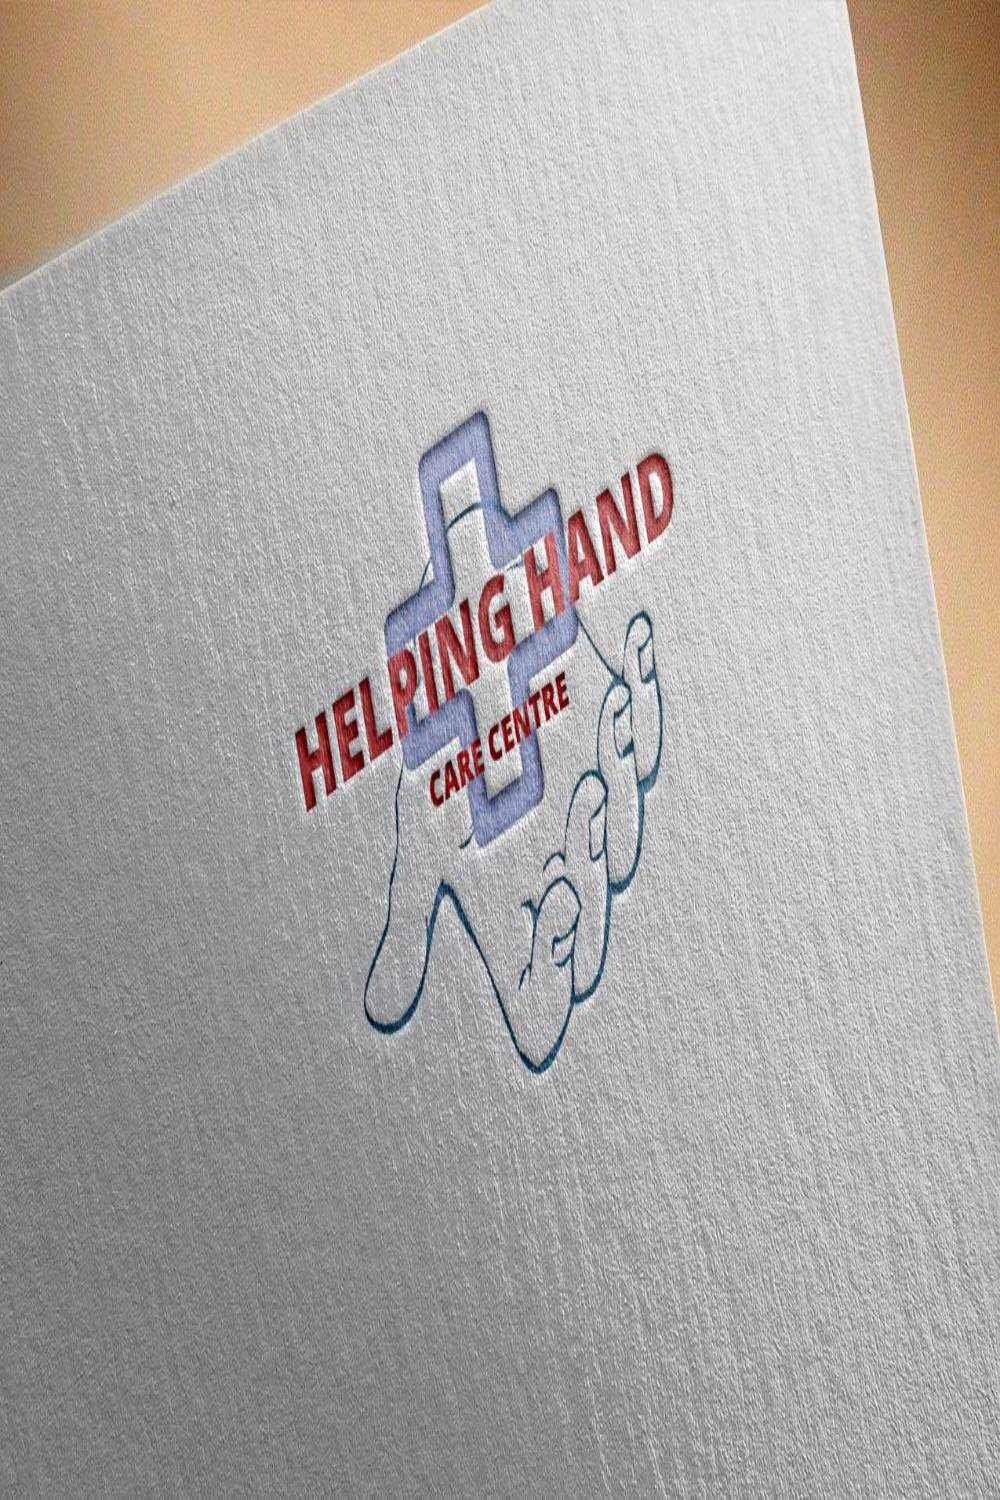 Helping Hand Care Centre Logo Design pinterest image.